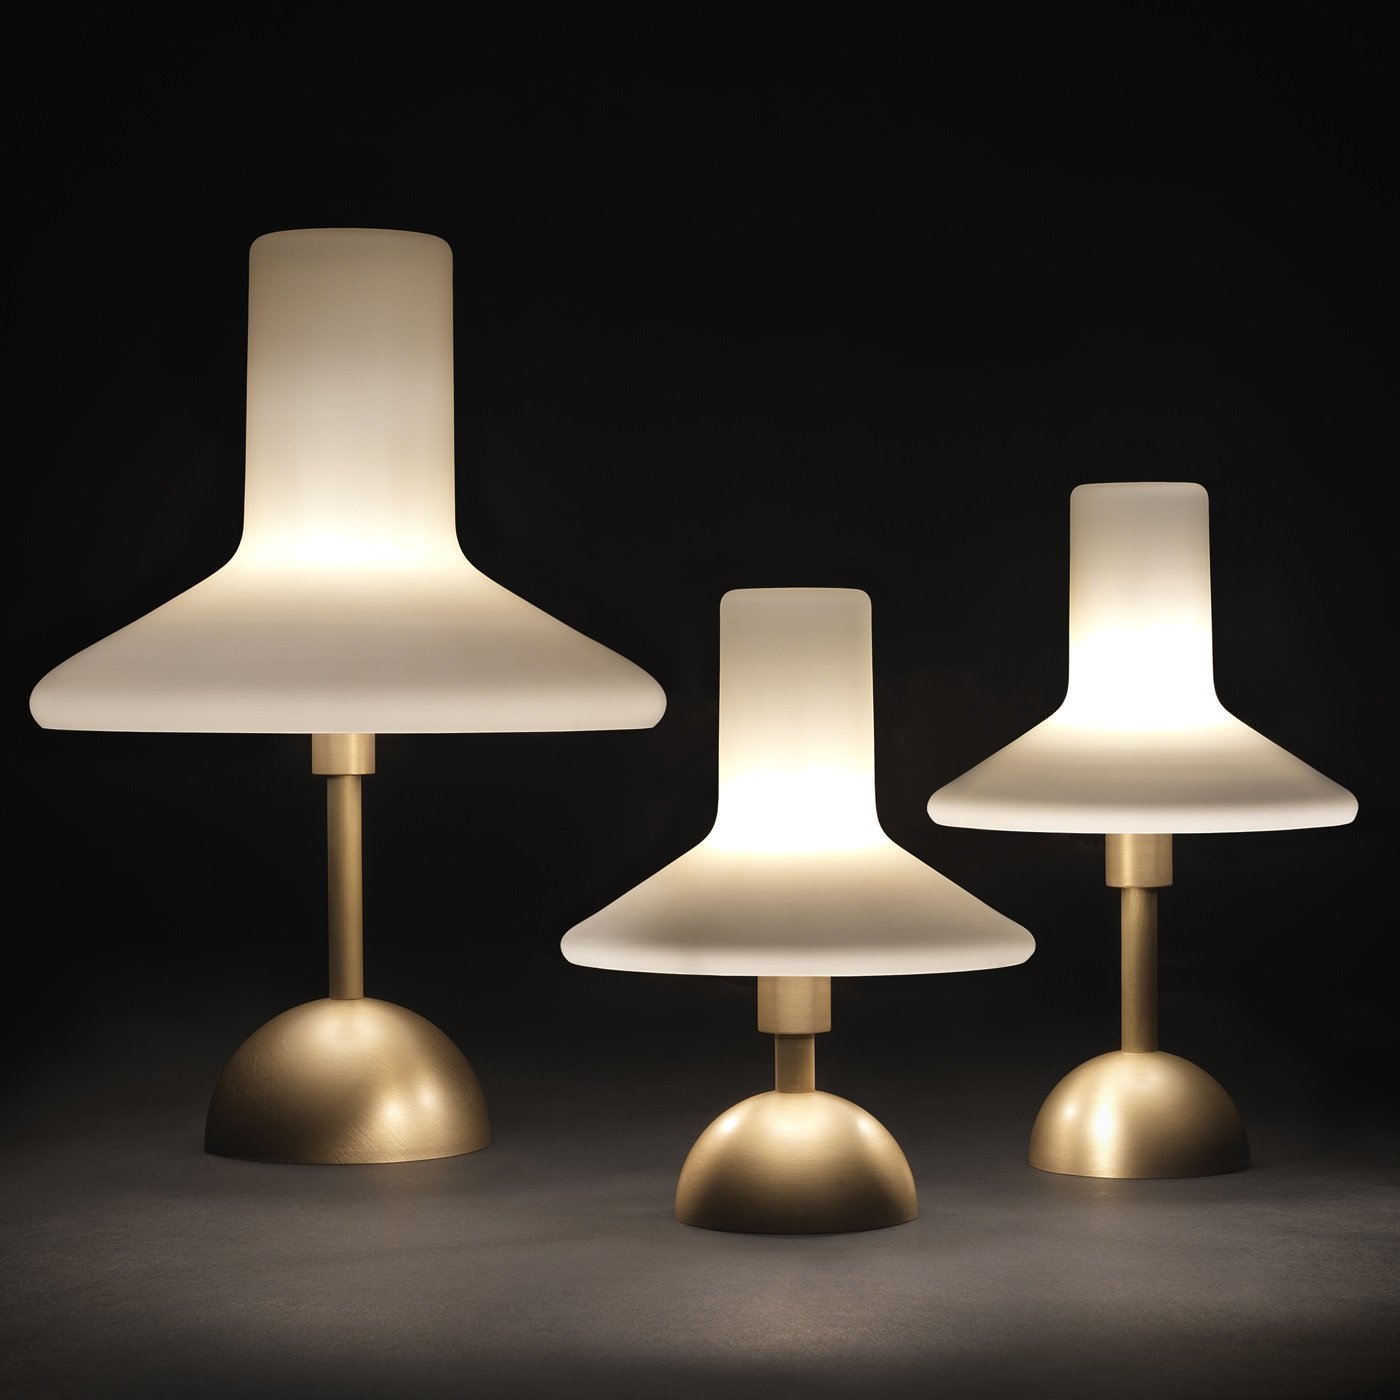 Olly Brass Medium Table Lamp - Alternative view 1